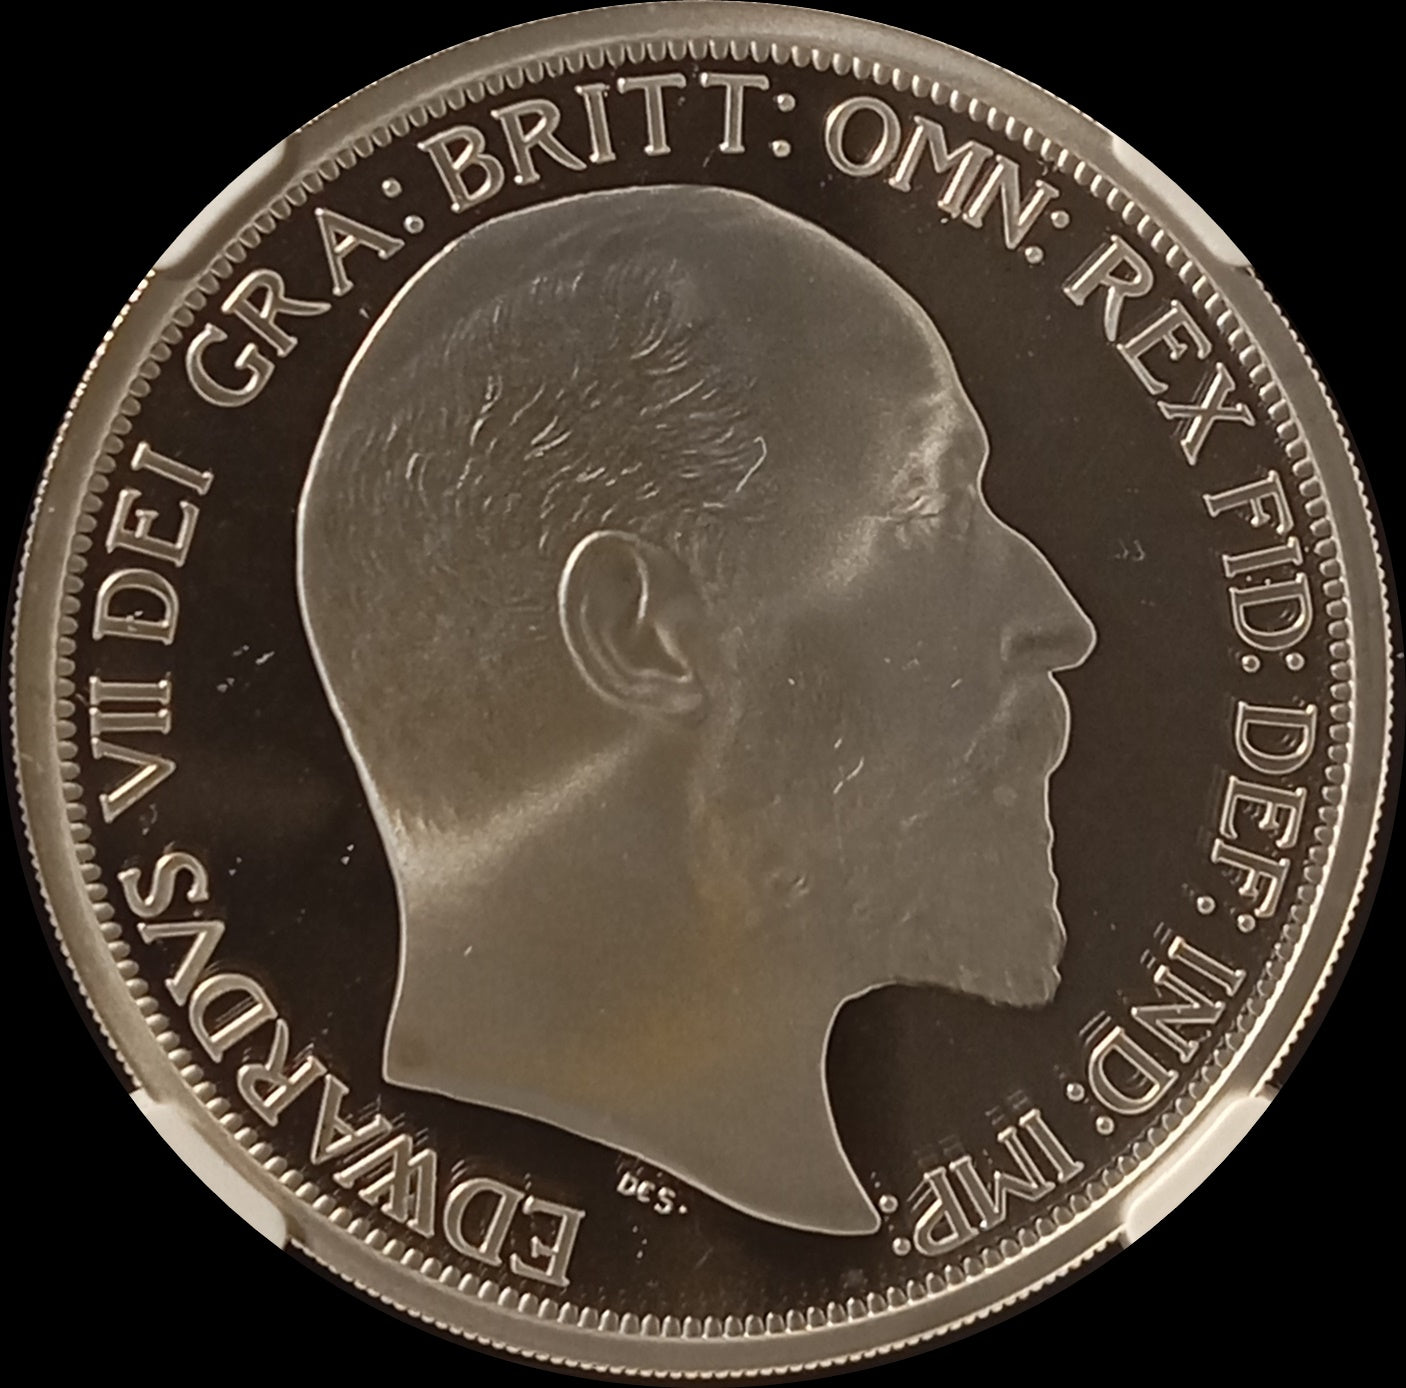 EDWARD VII, British Monarchs, 1 Oz Silver 2 £, Proof NGC PF 69, 2023